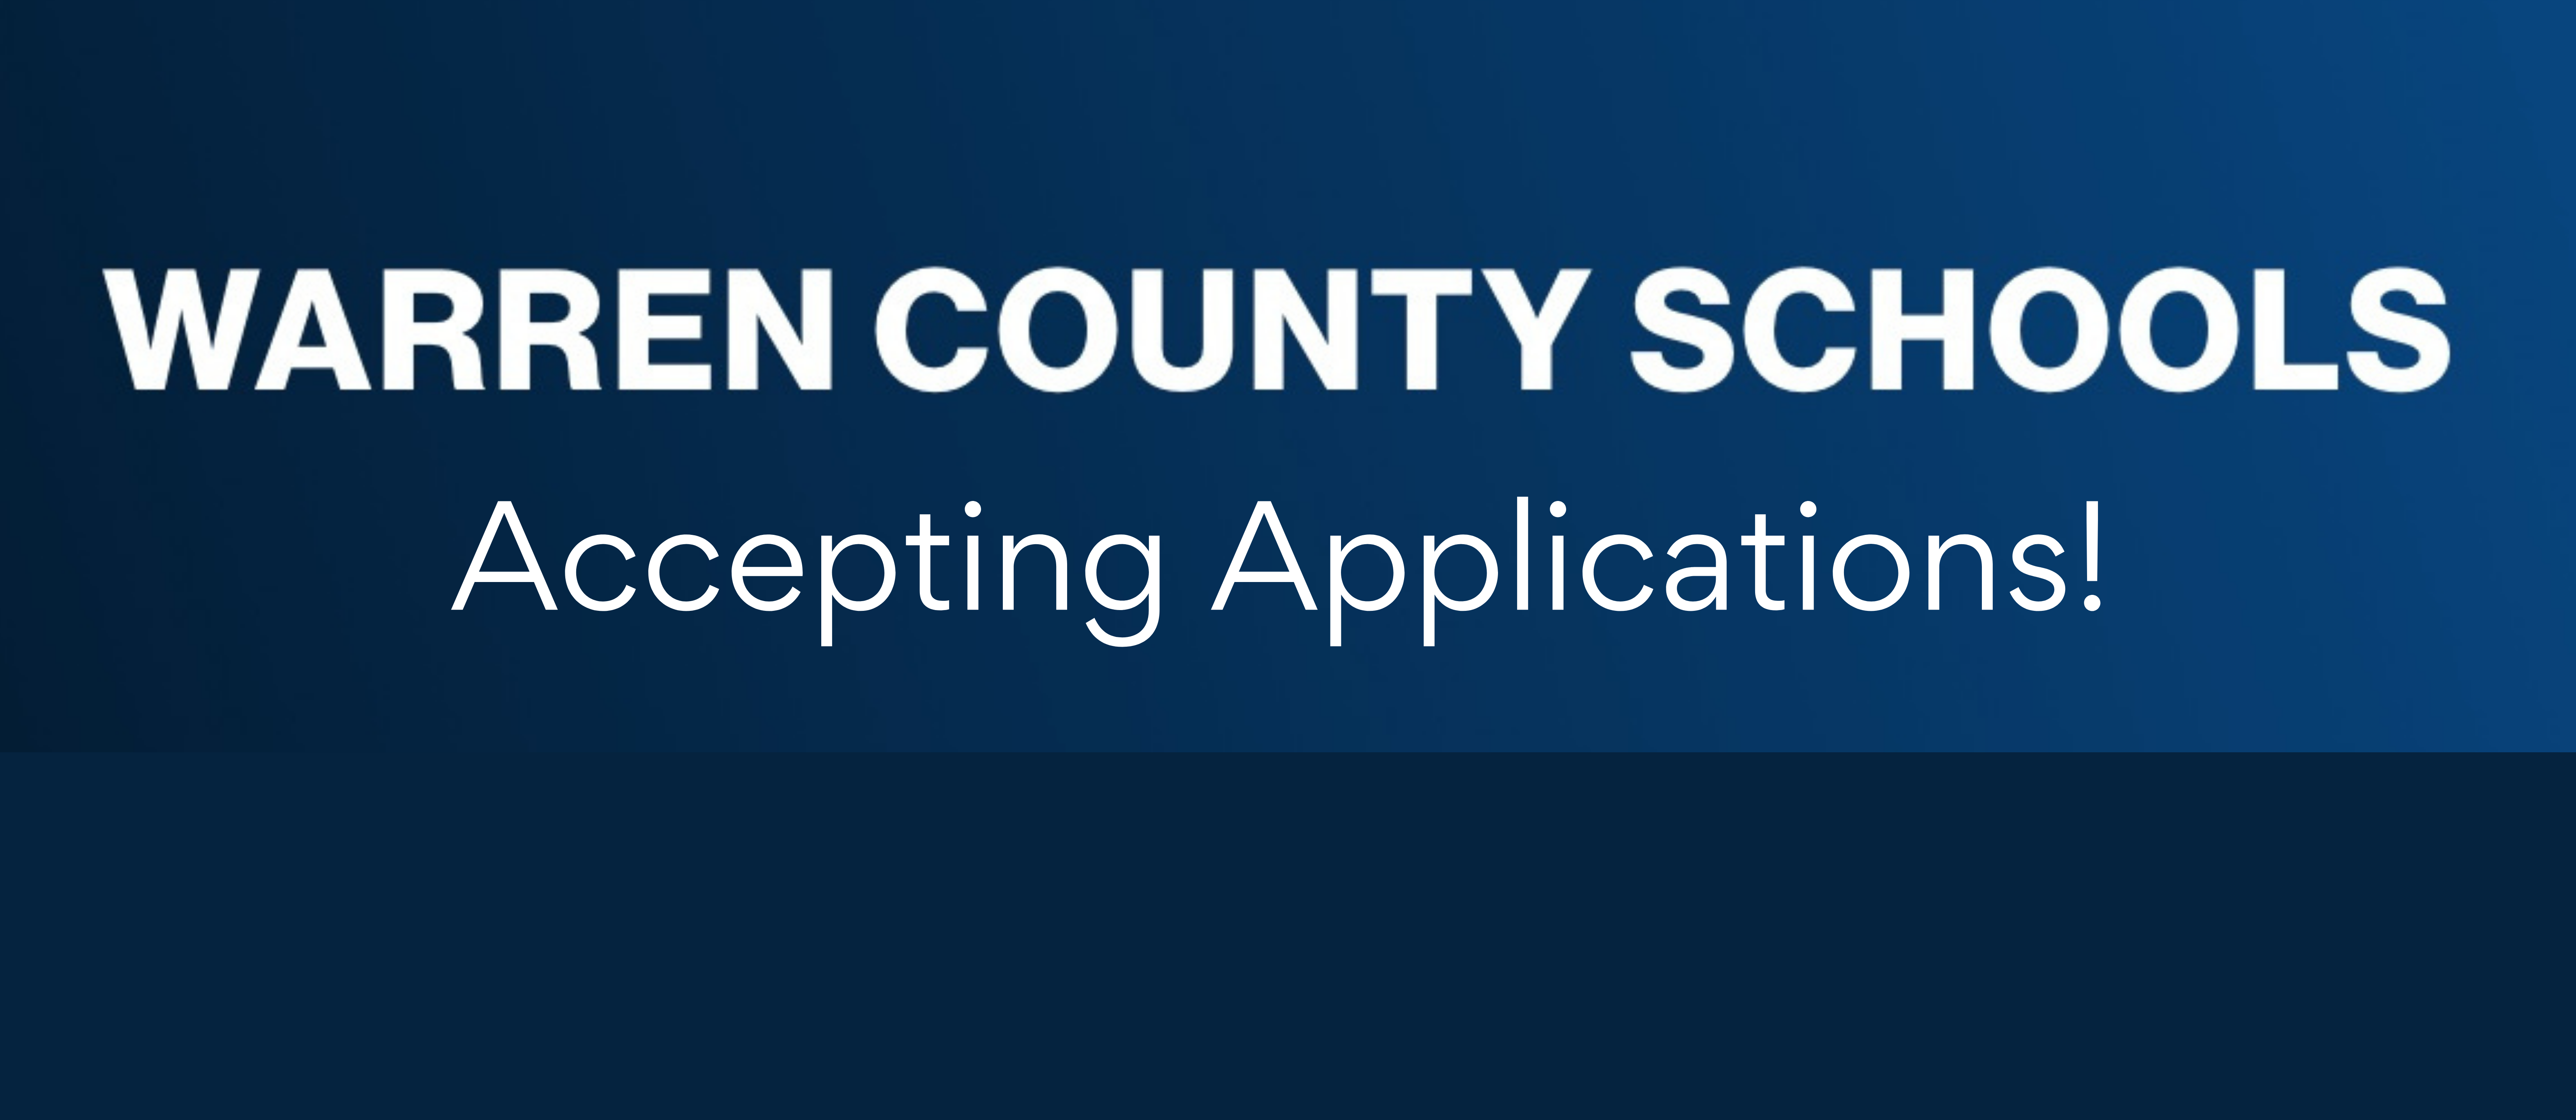 Warren County Schools - Accepting Applications